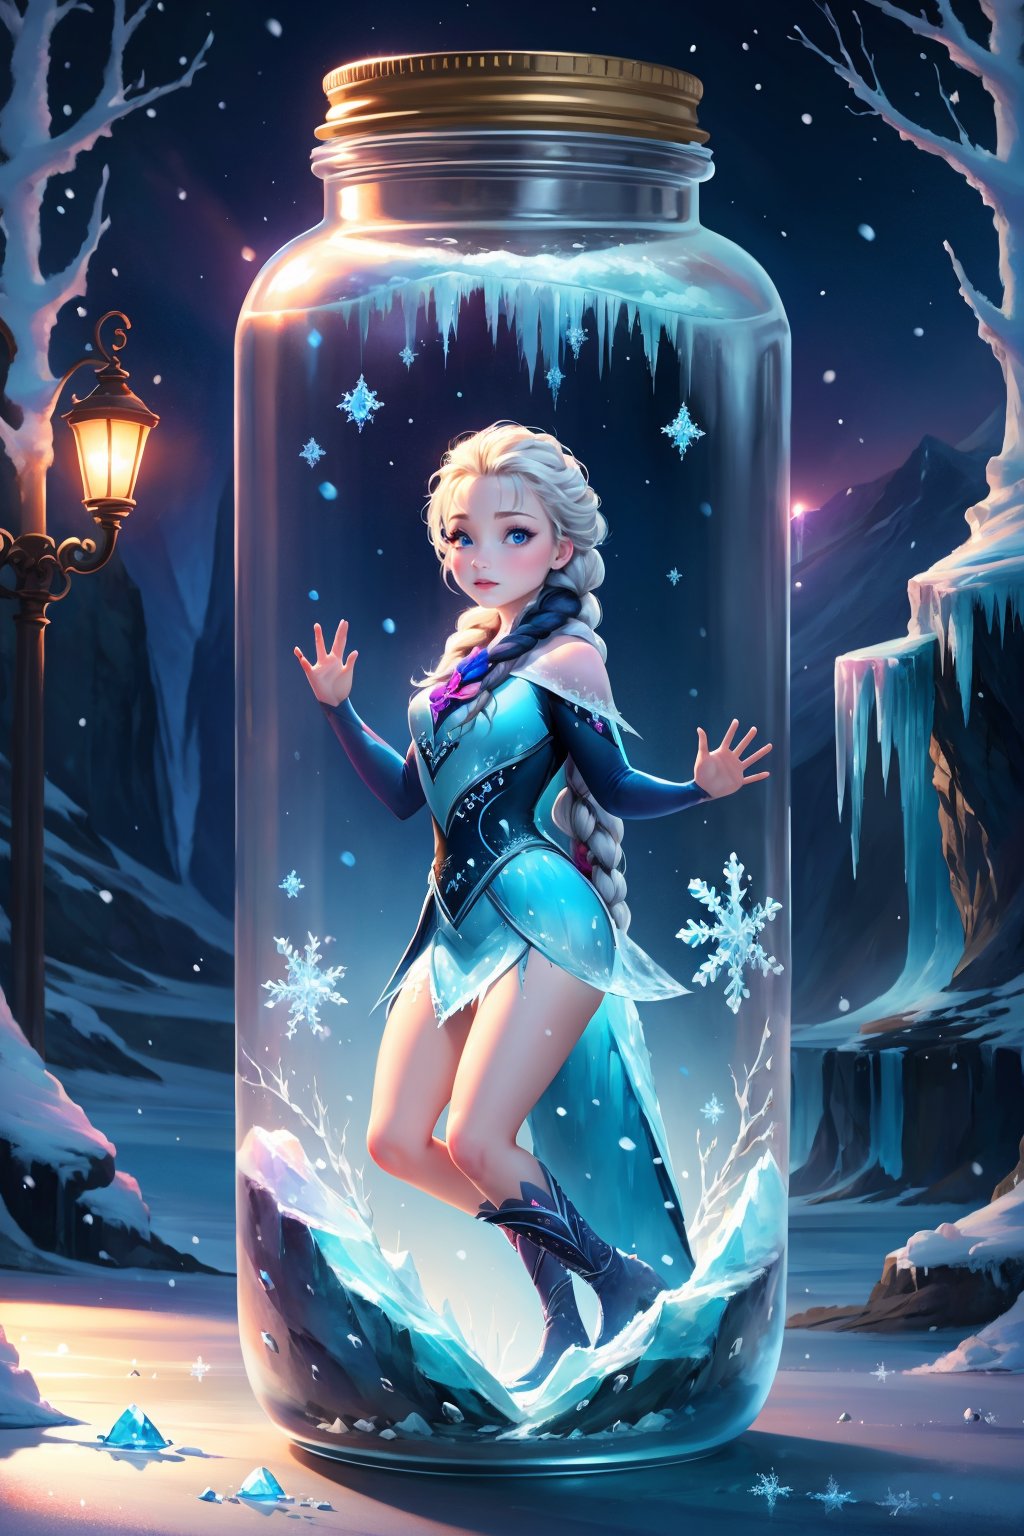 1 girl, frozen, blue theme, nature, realistic